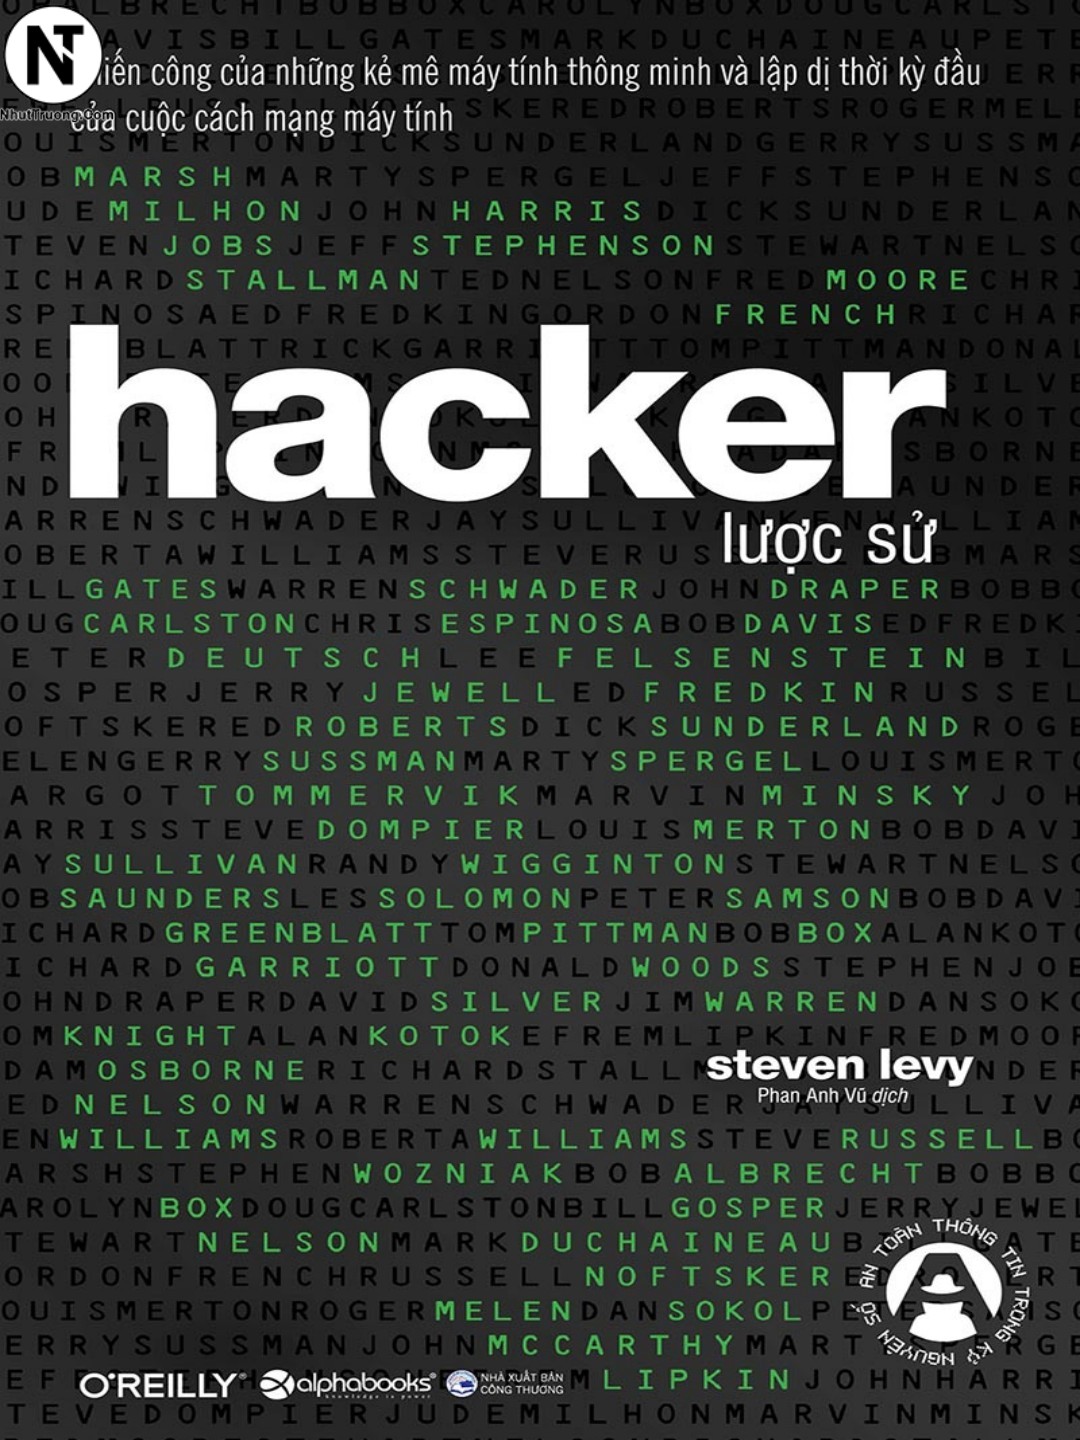 Hacker lược sử Ebook